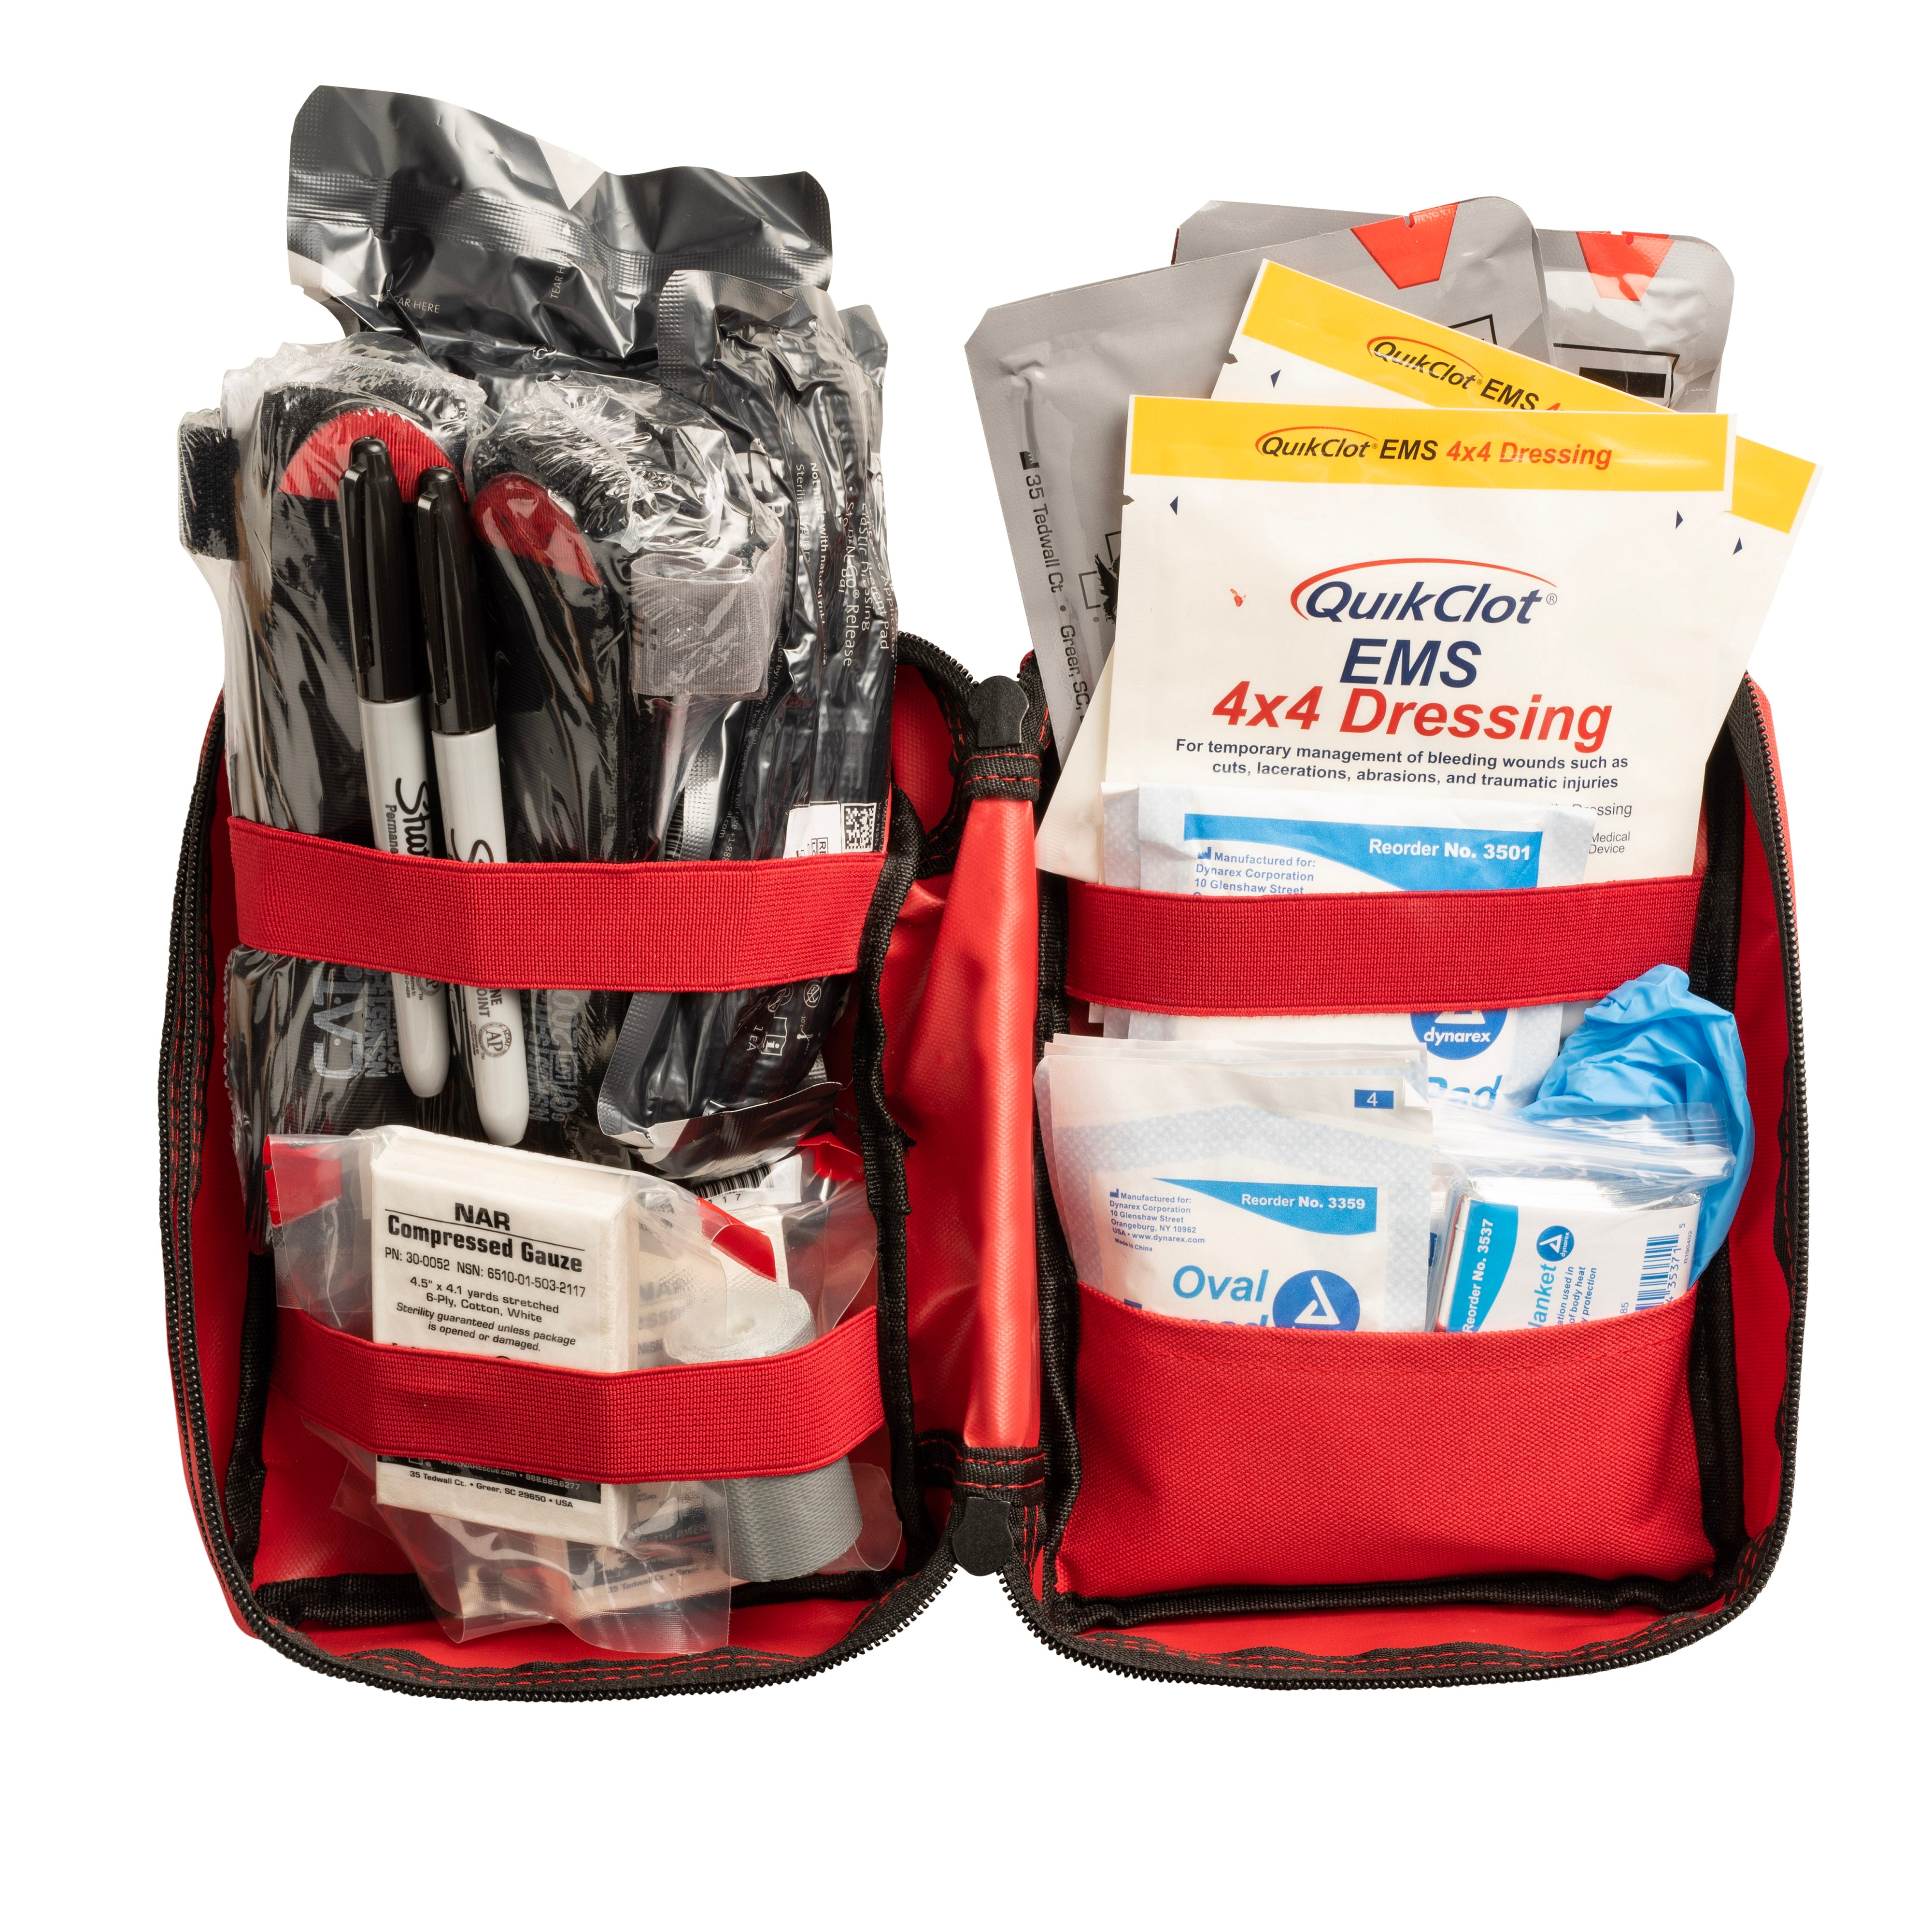 Scherber Public Access Bleeding Control Kit | Trauma Equipment, First Aid Supplies | Advanced